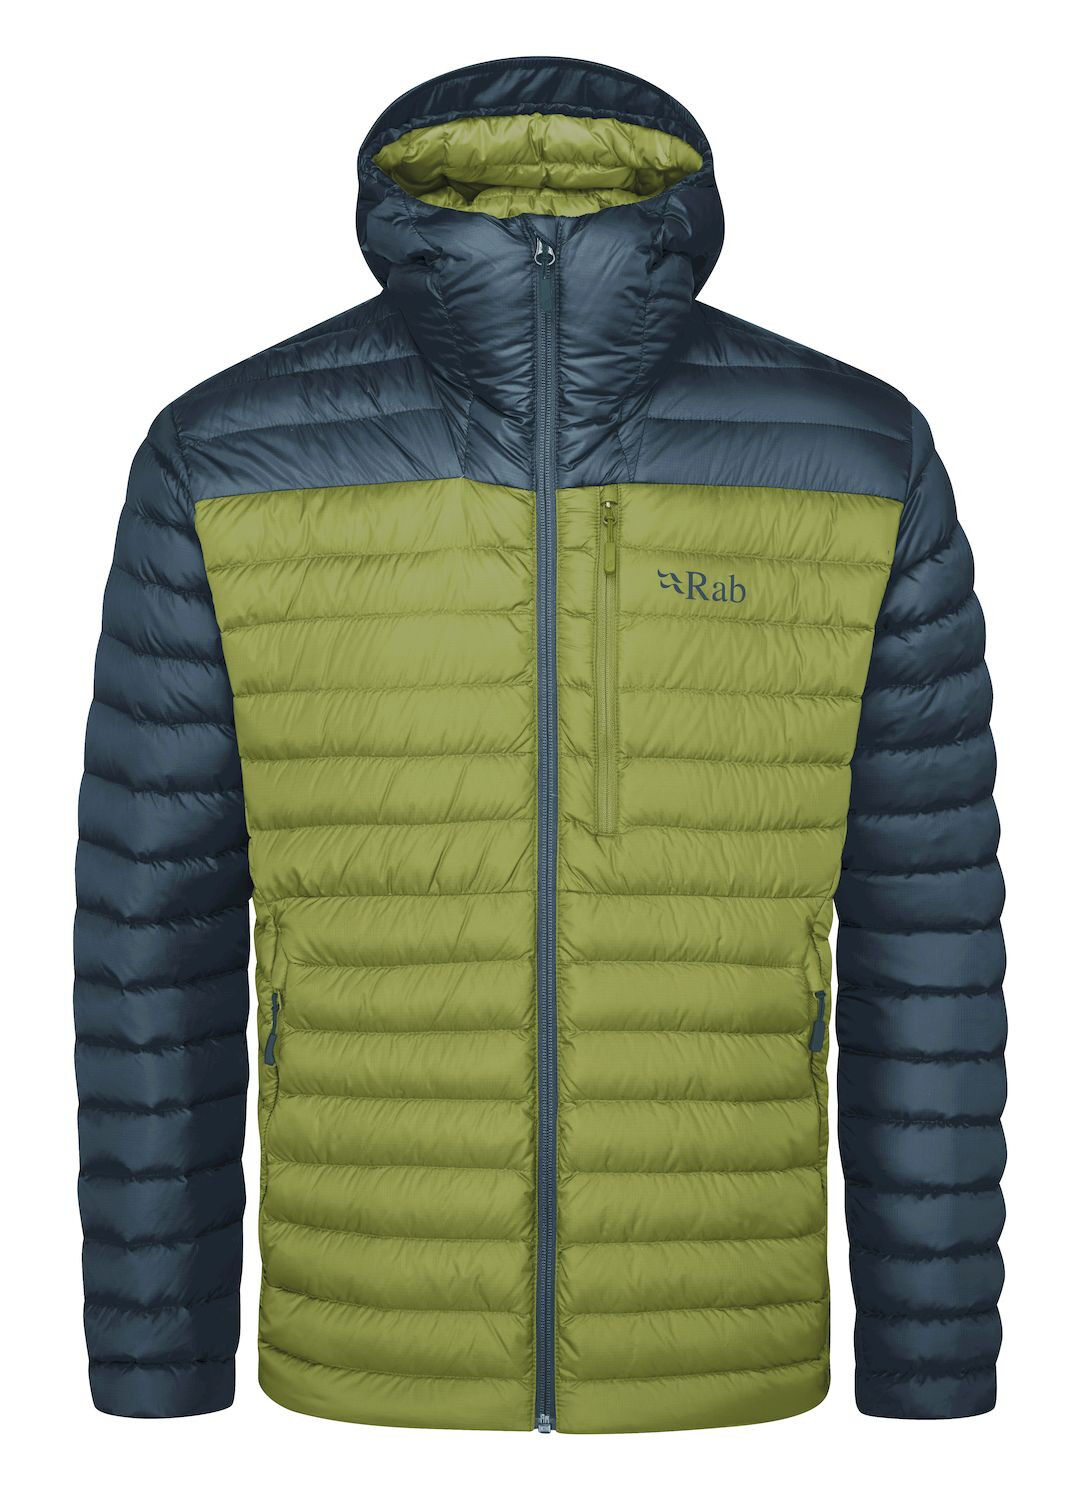 Rab Microlight Alpine Jacket - Down jacket - Men's